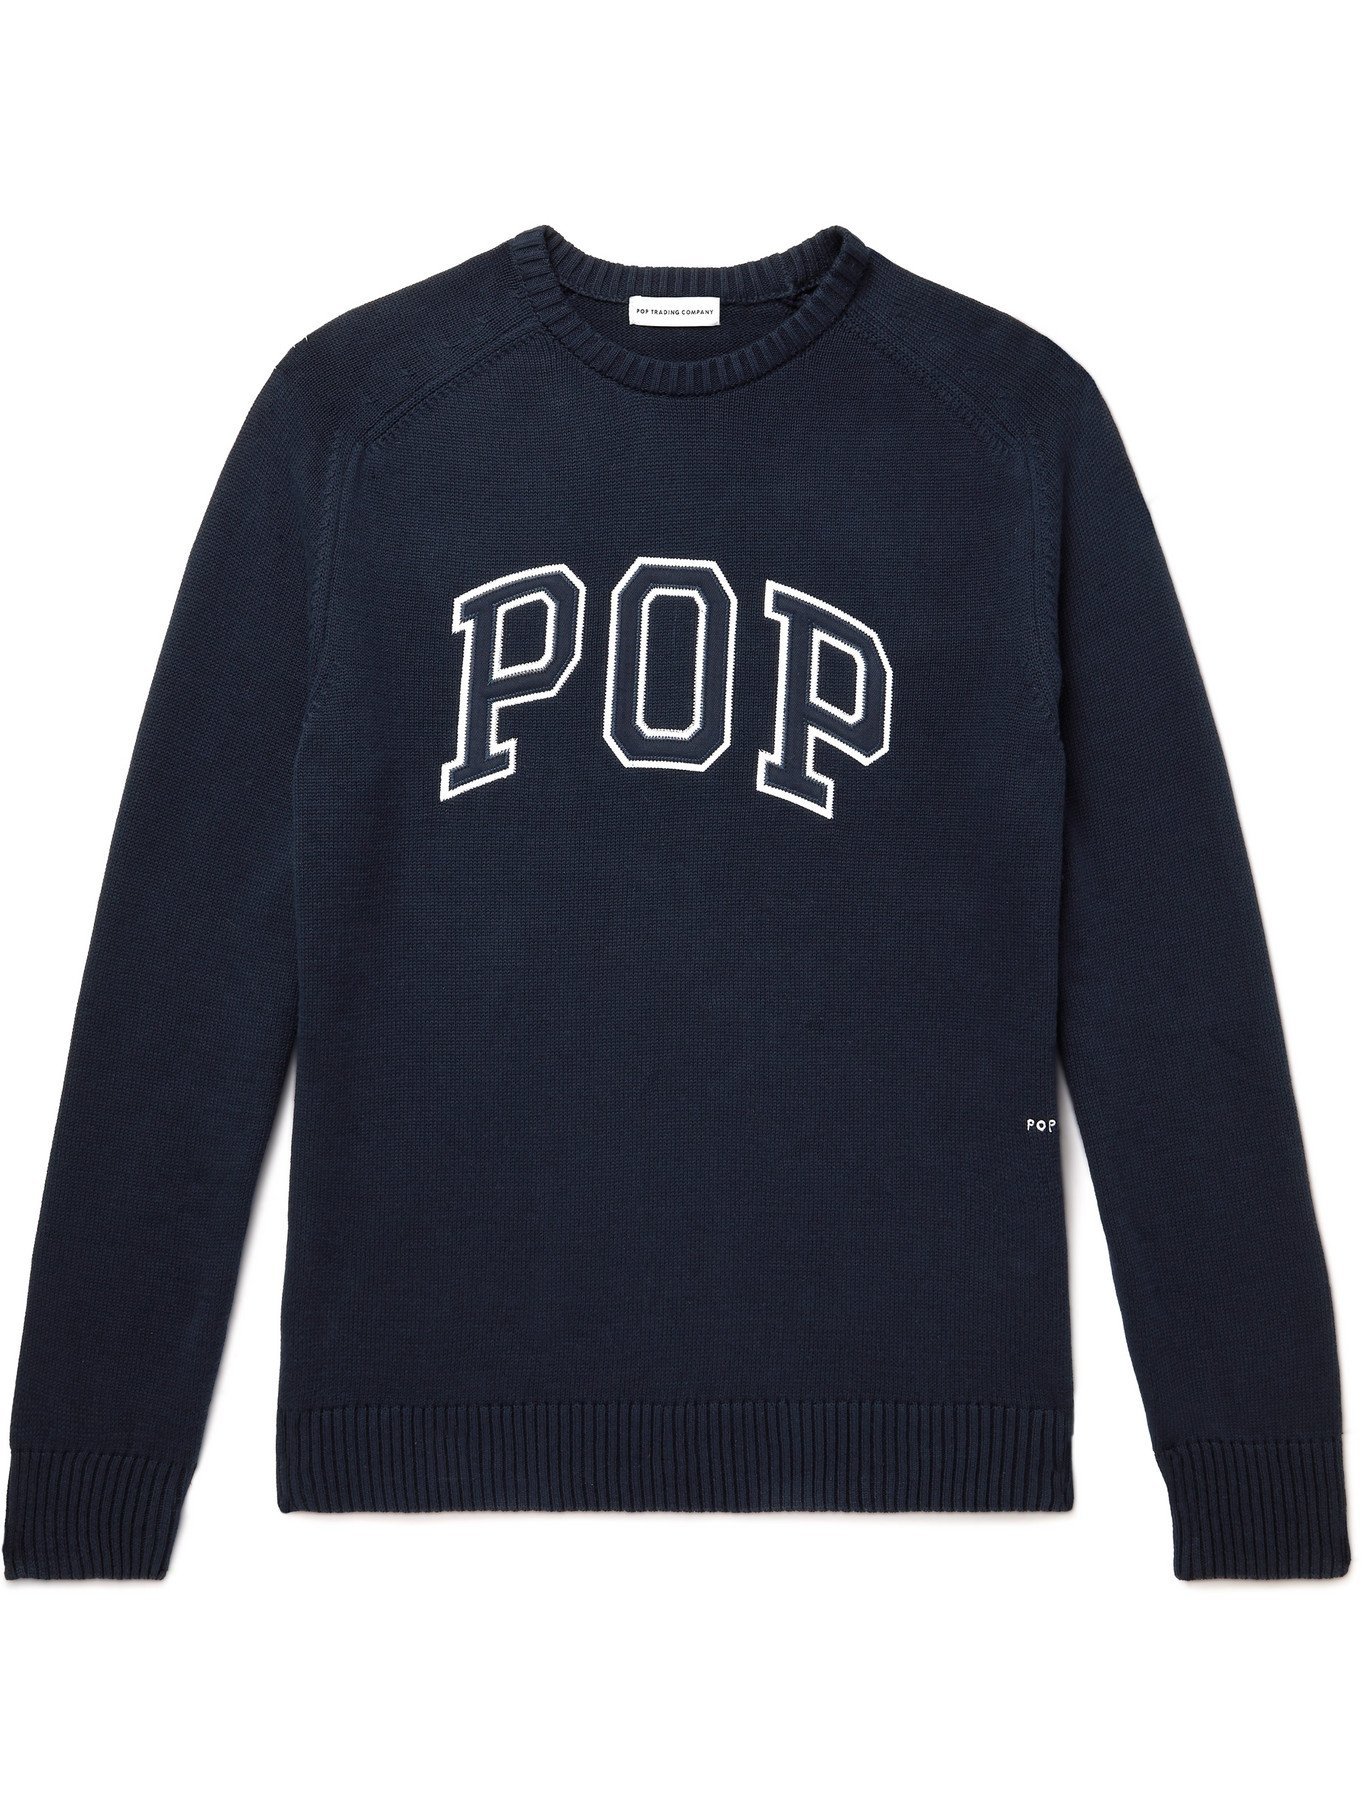 pop trading company sweater-connectedremag.com